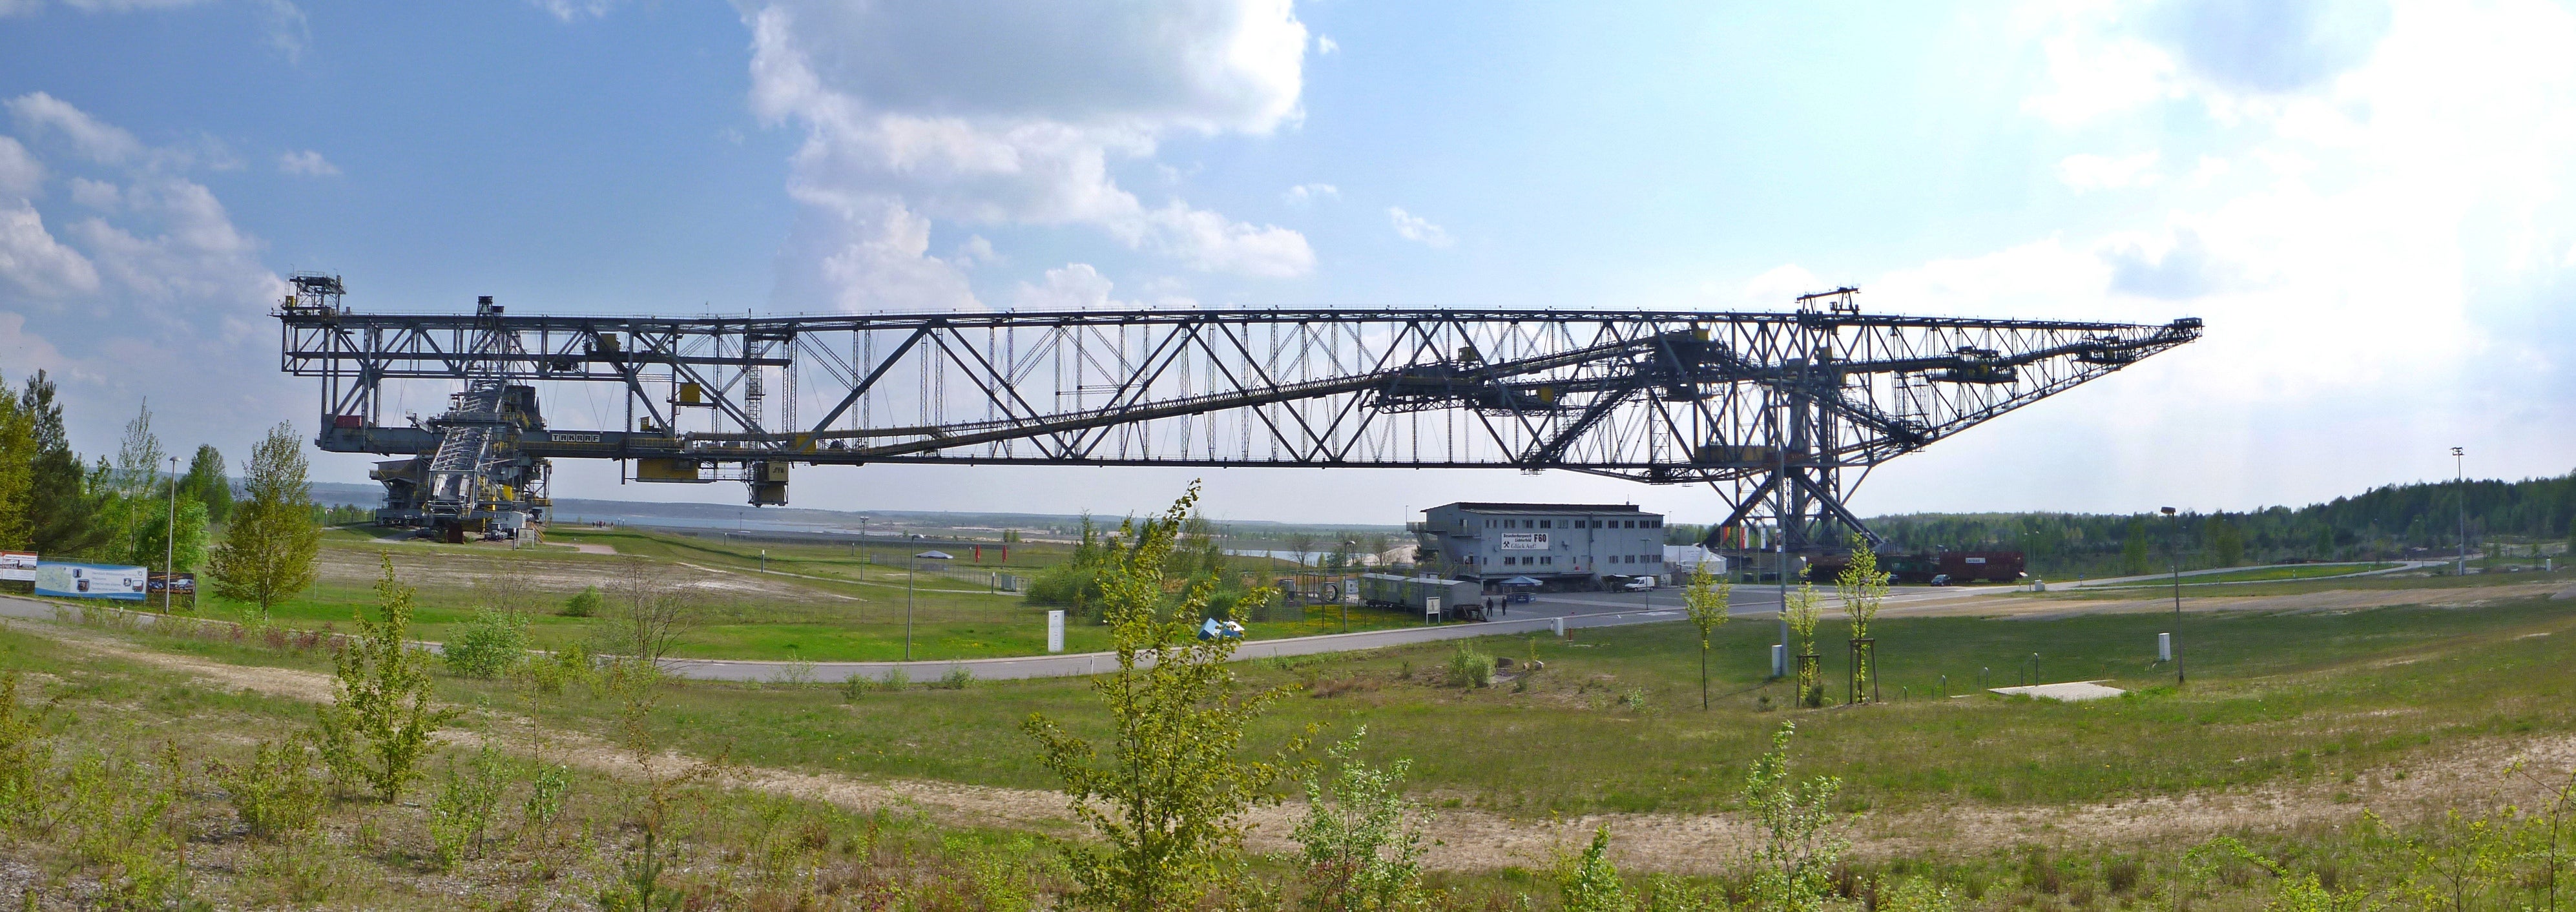 Image result for overburden conveyor bridge f60